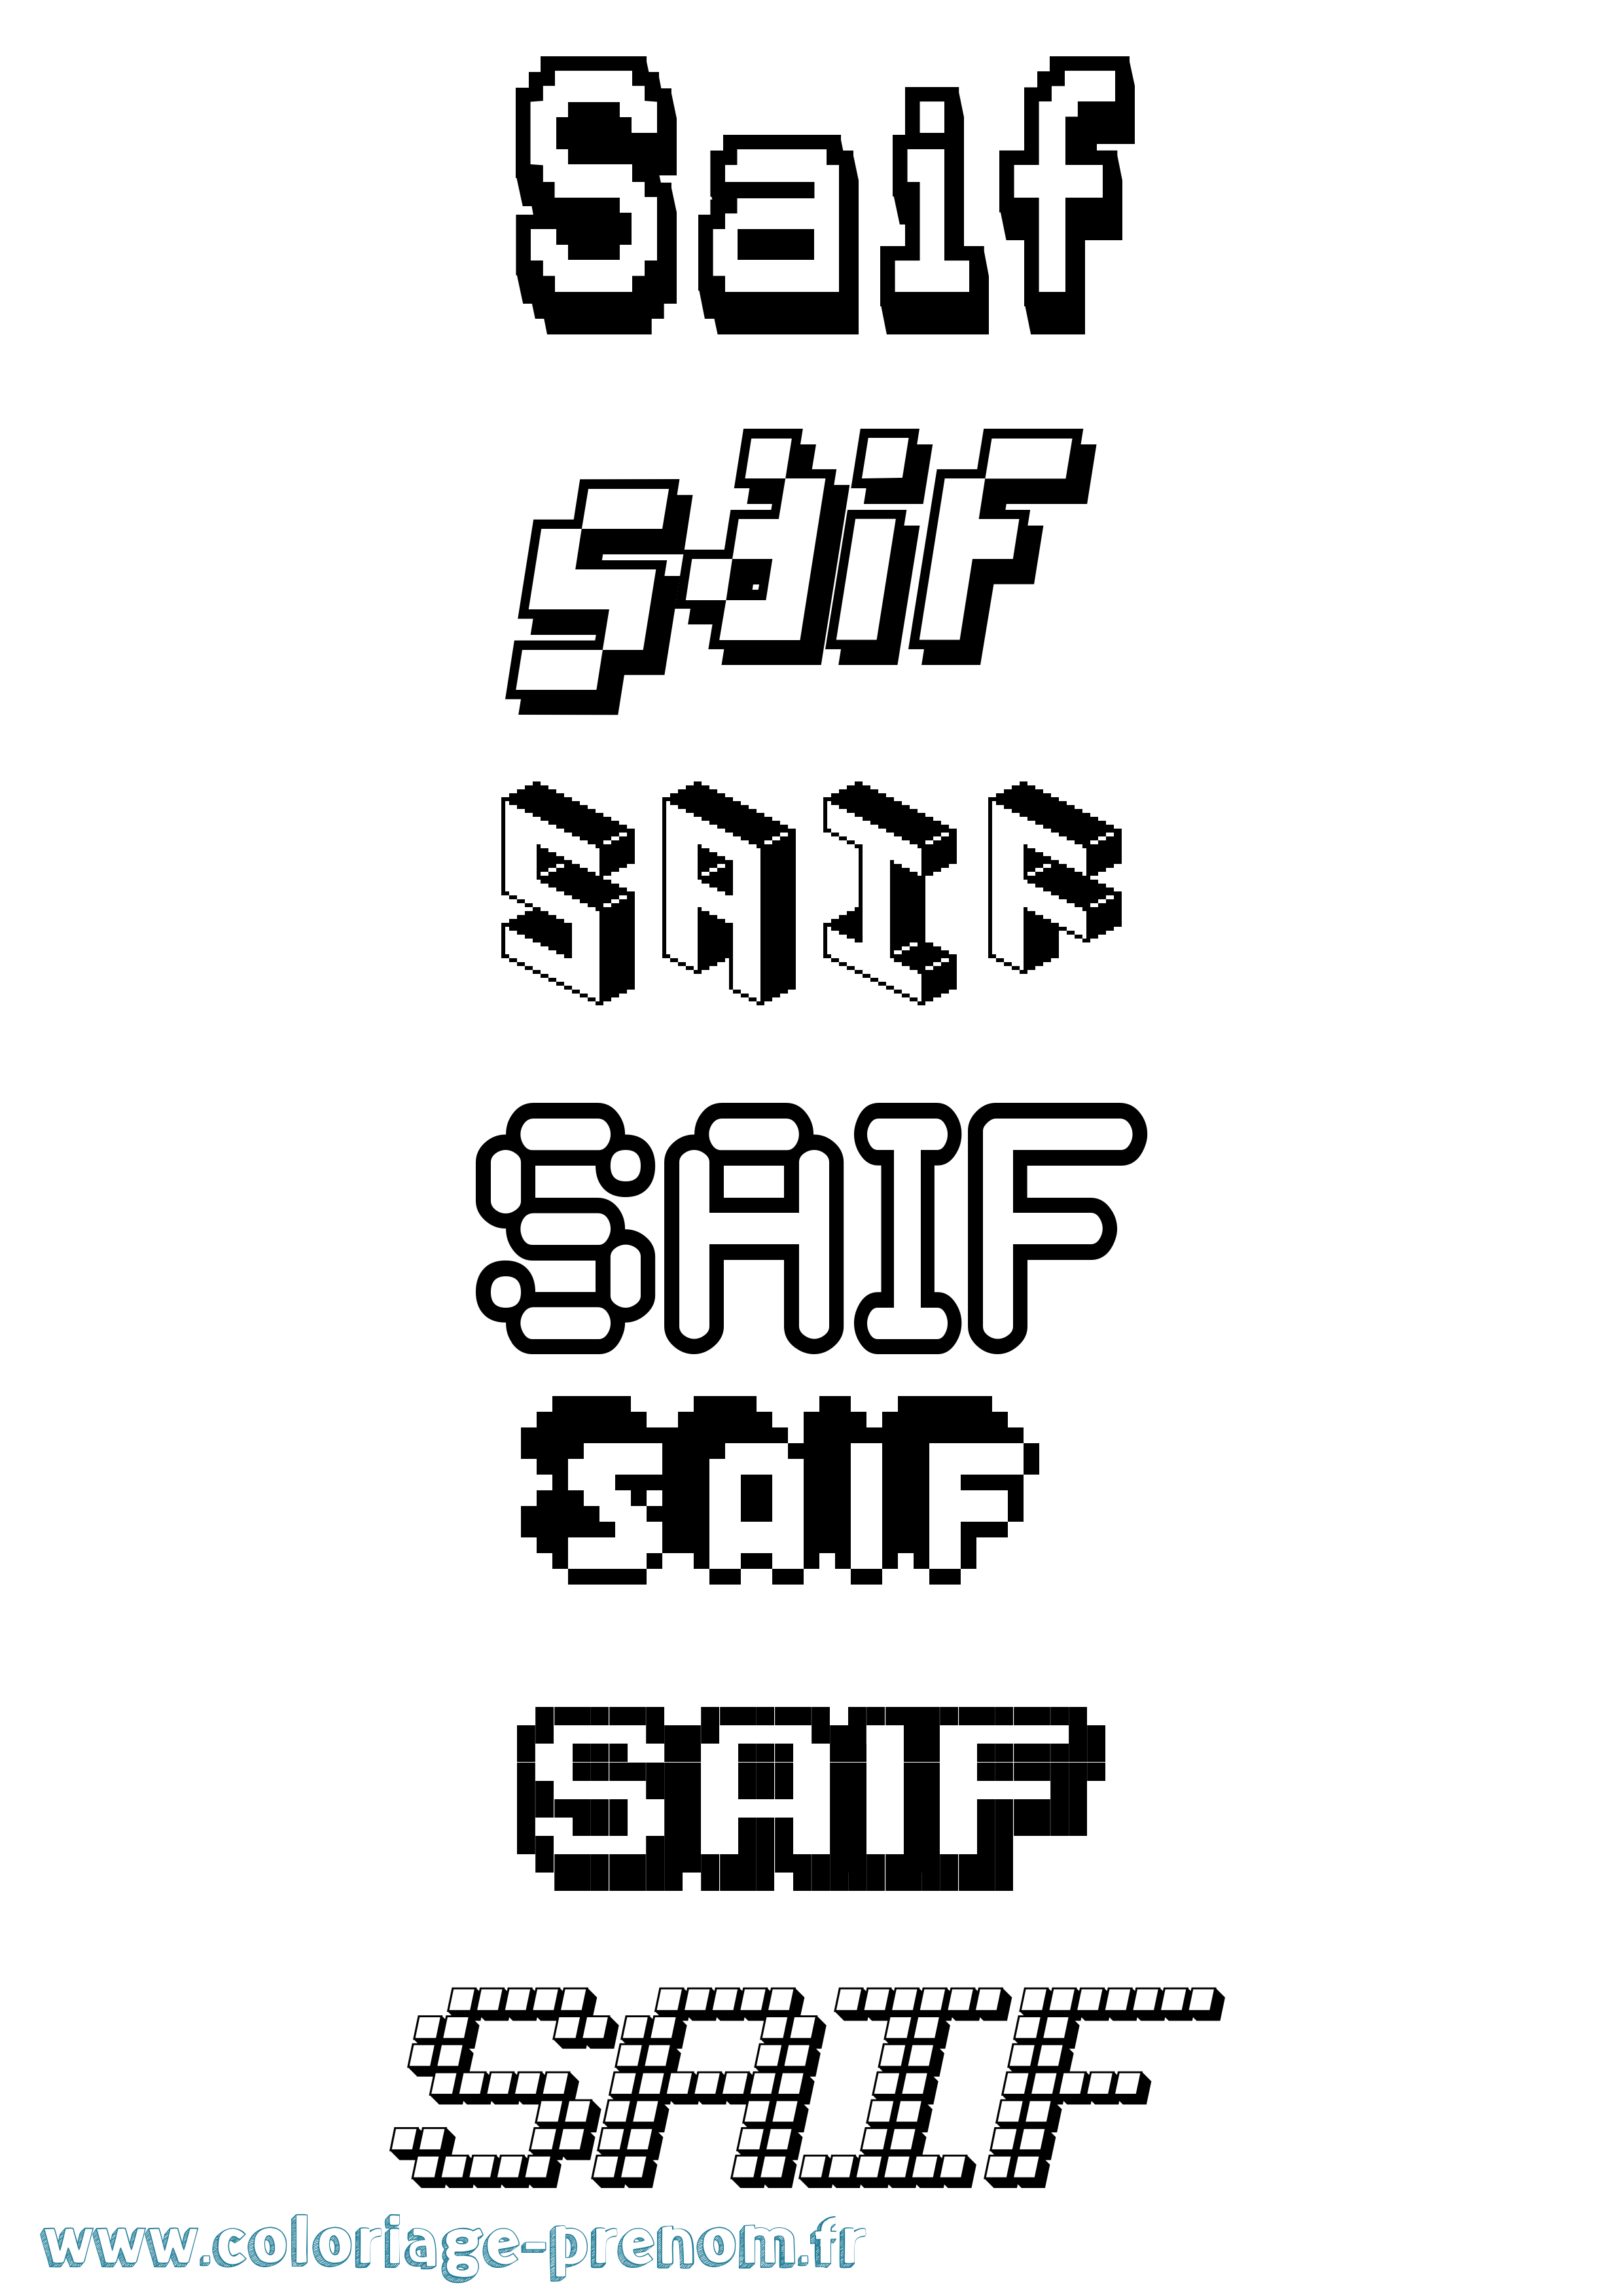 Coloriage prénom Saif Pixel